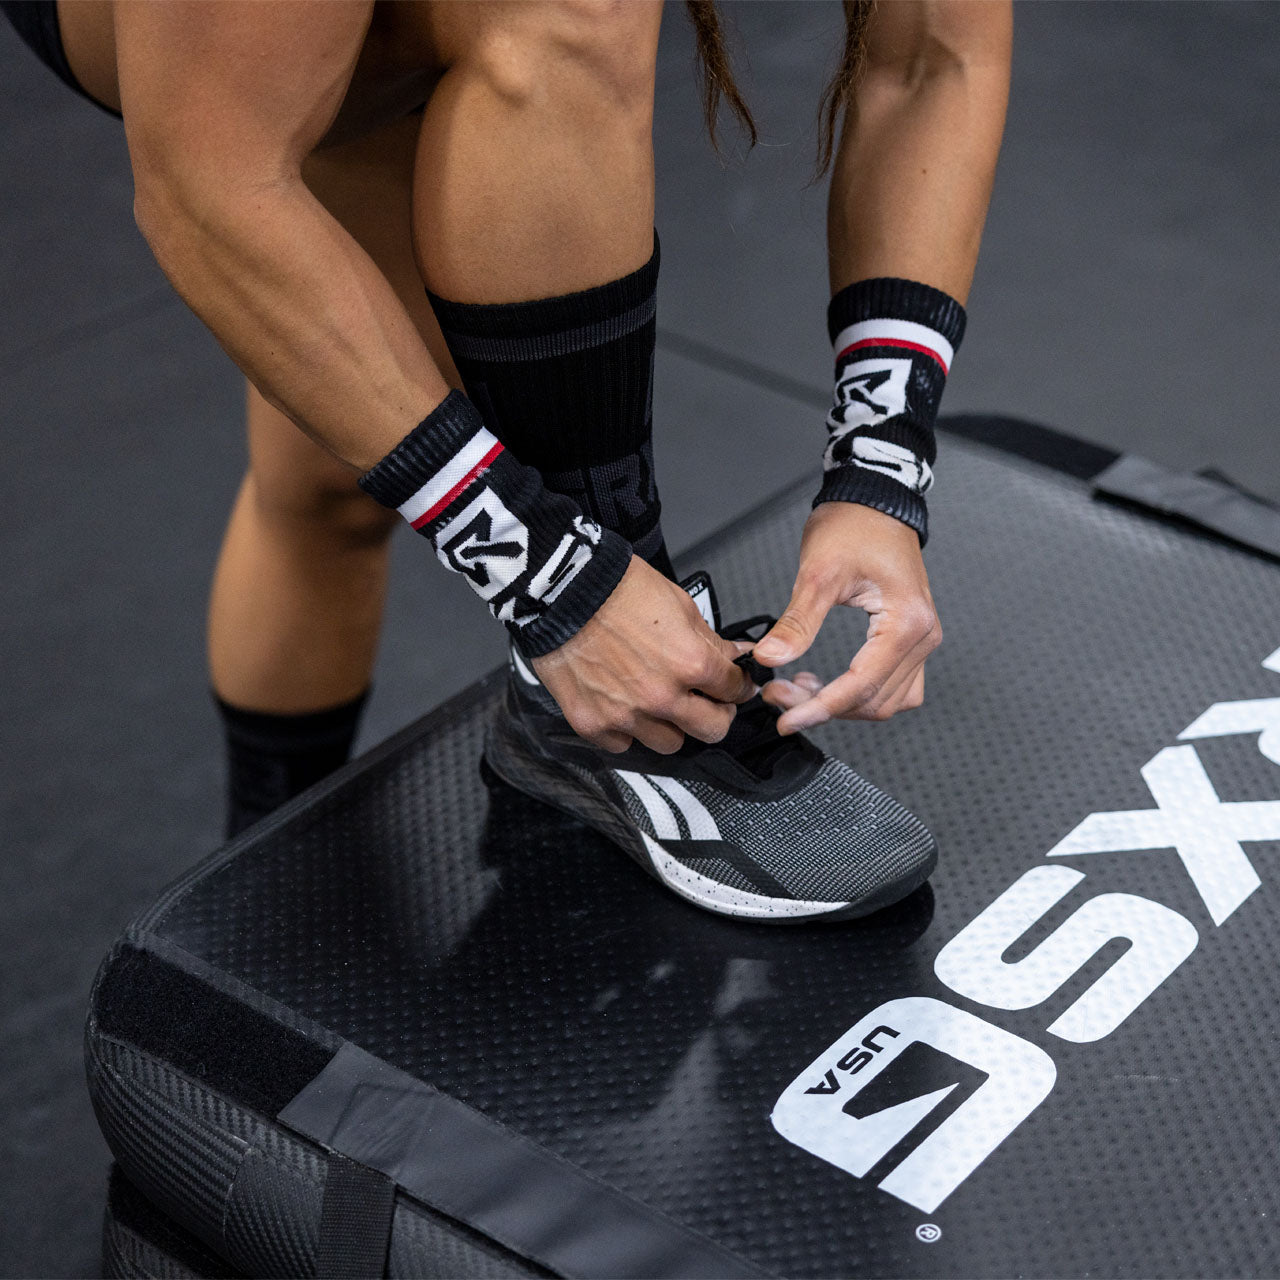 RXSG Wrist Socks worn by Athlete